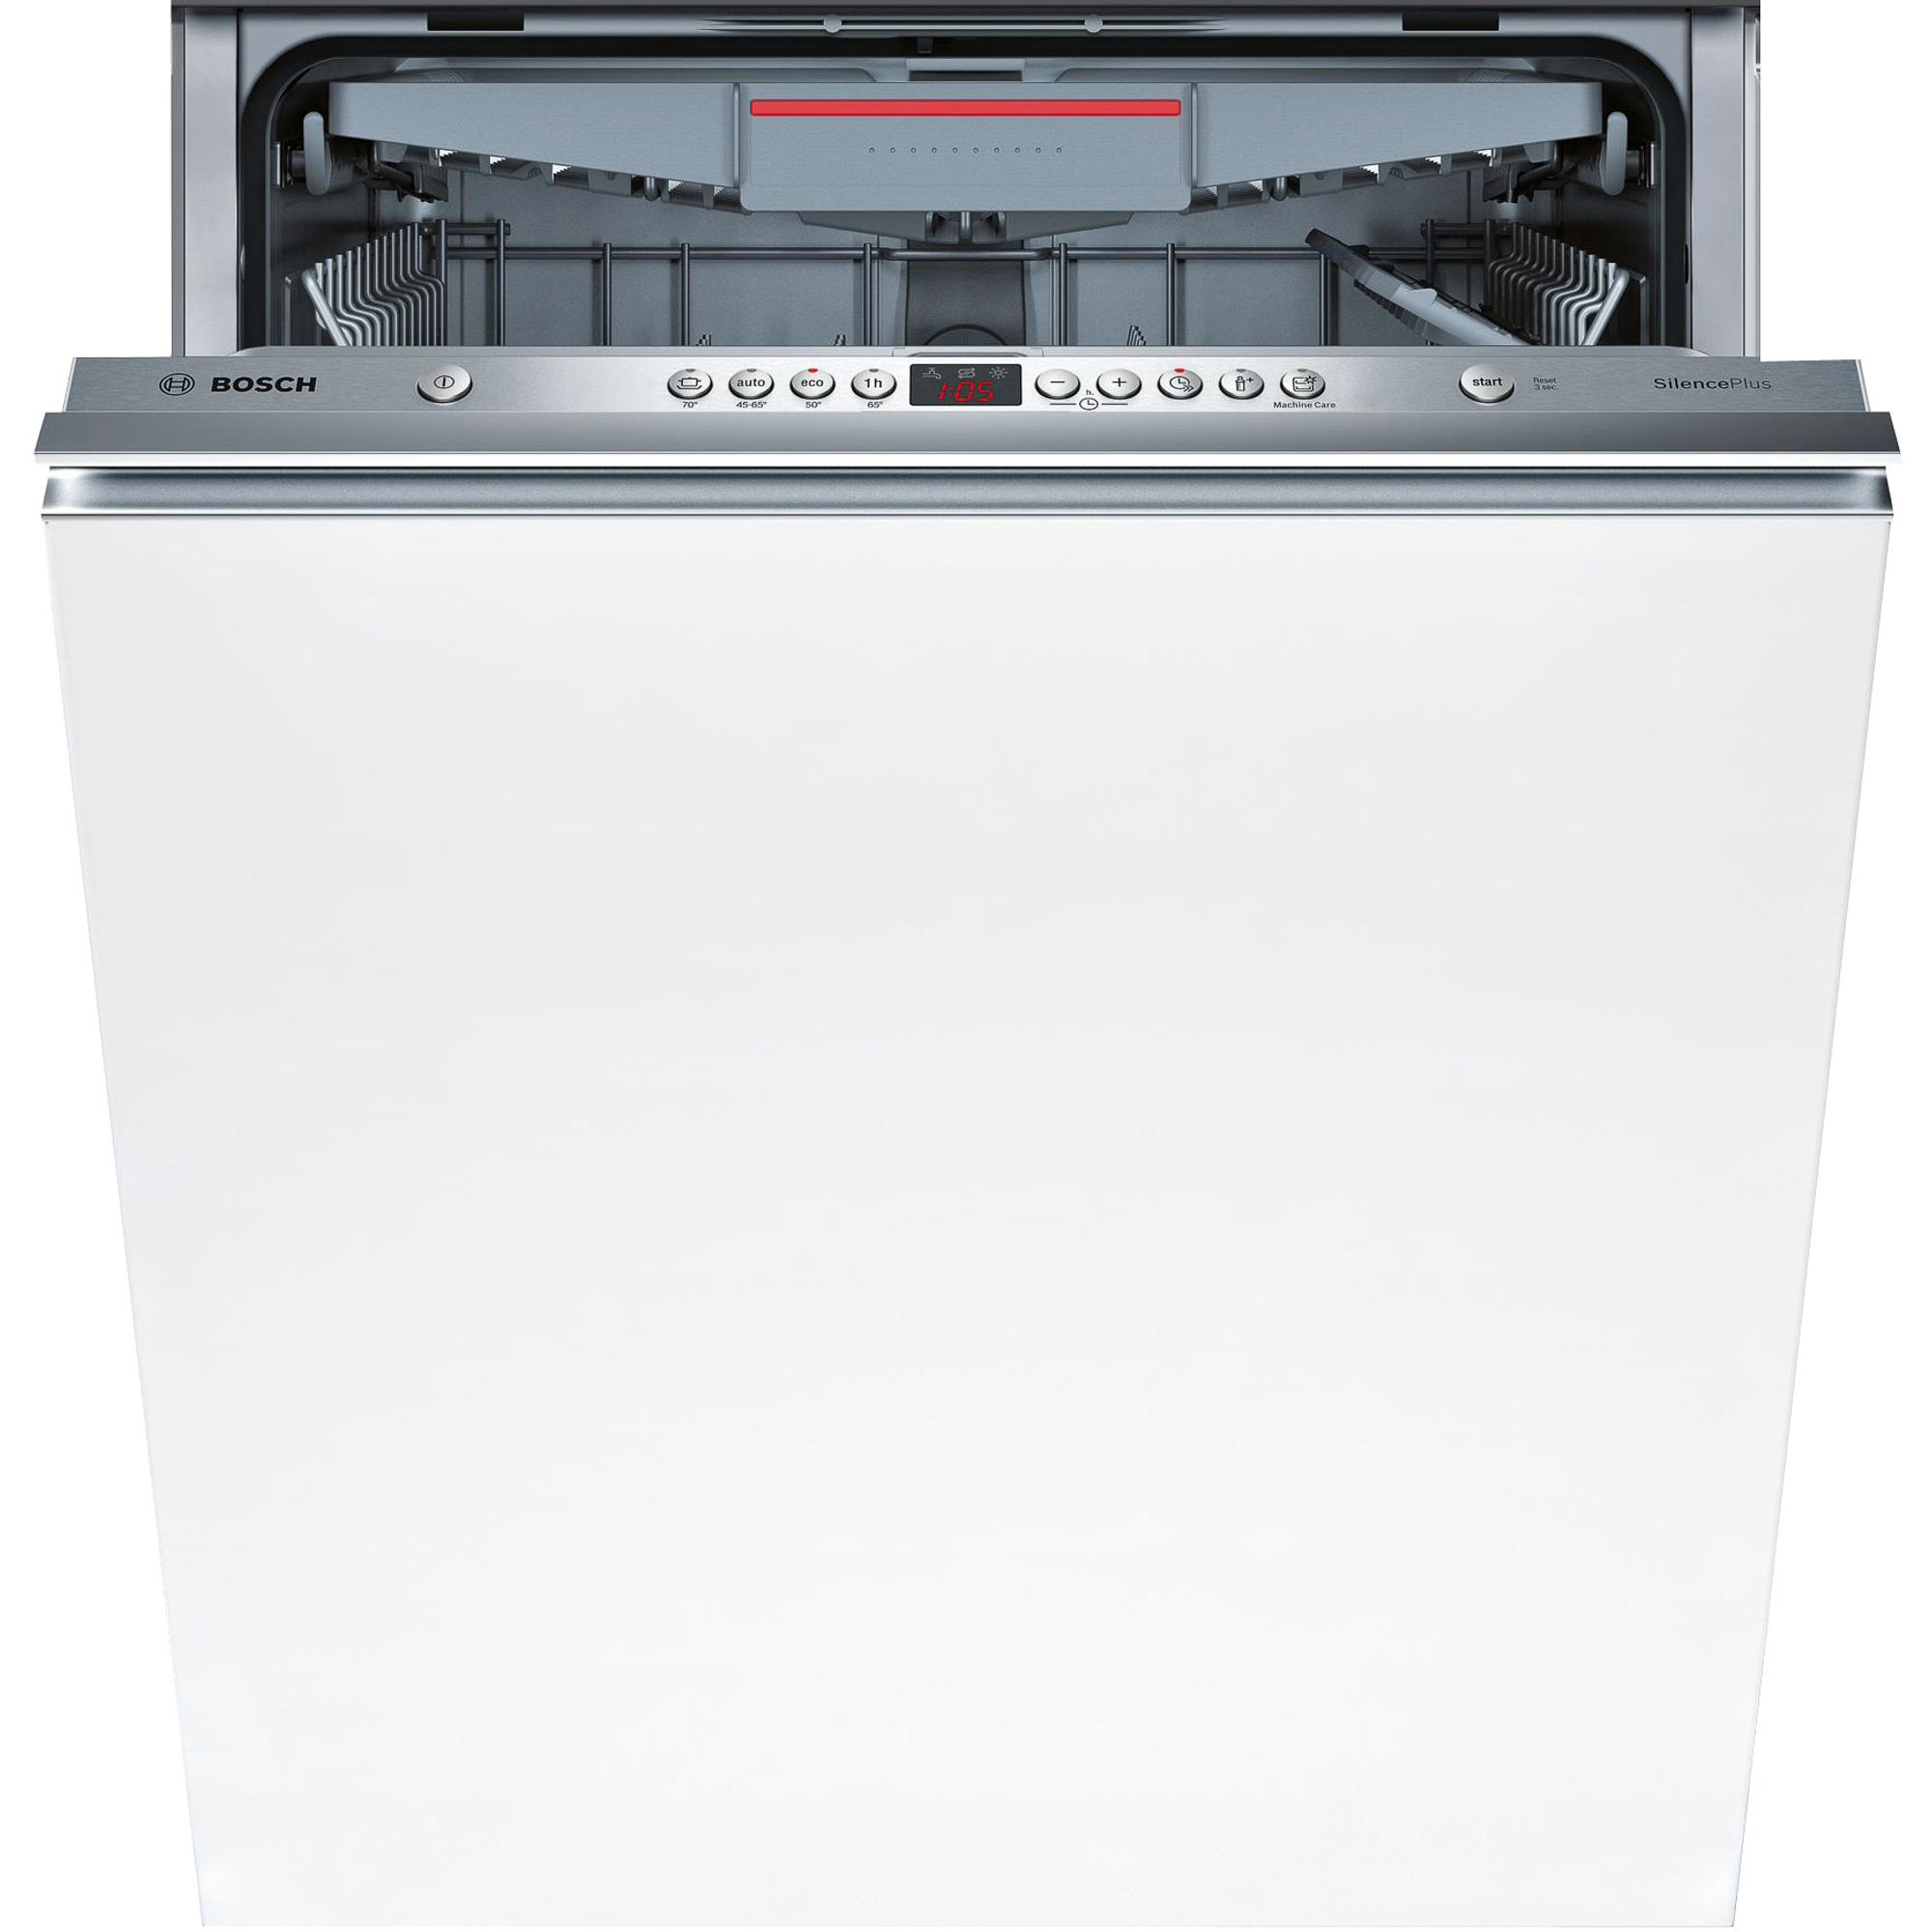 Посудомоечная машина Bosch Serie 4 SMV44KX00R, цвет белый - фото 1